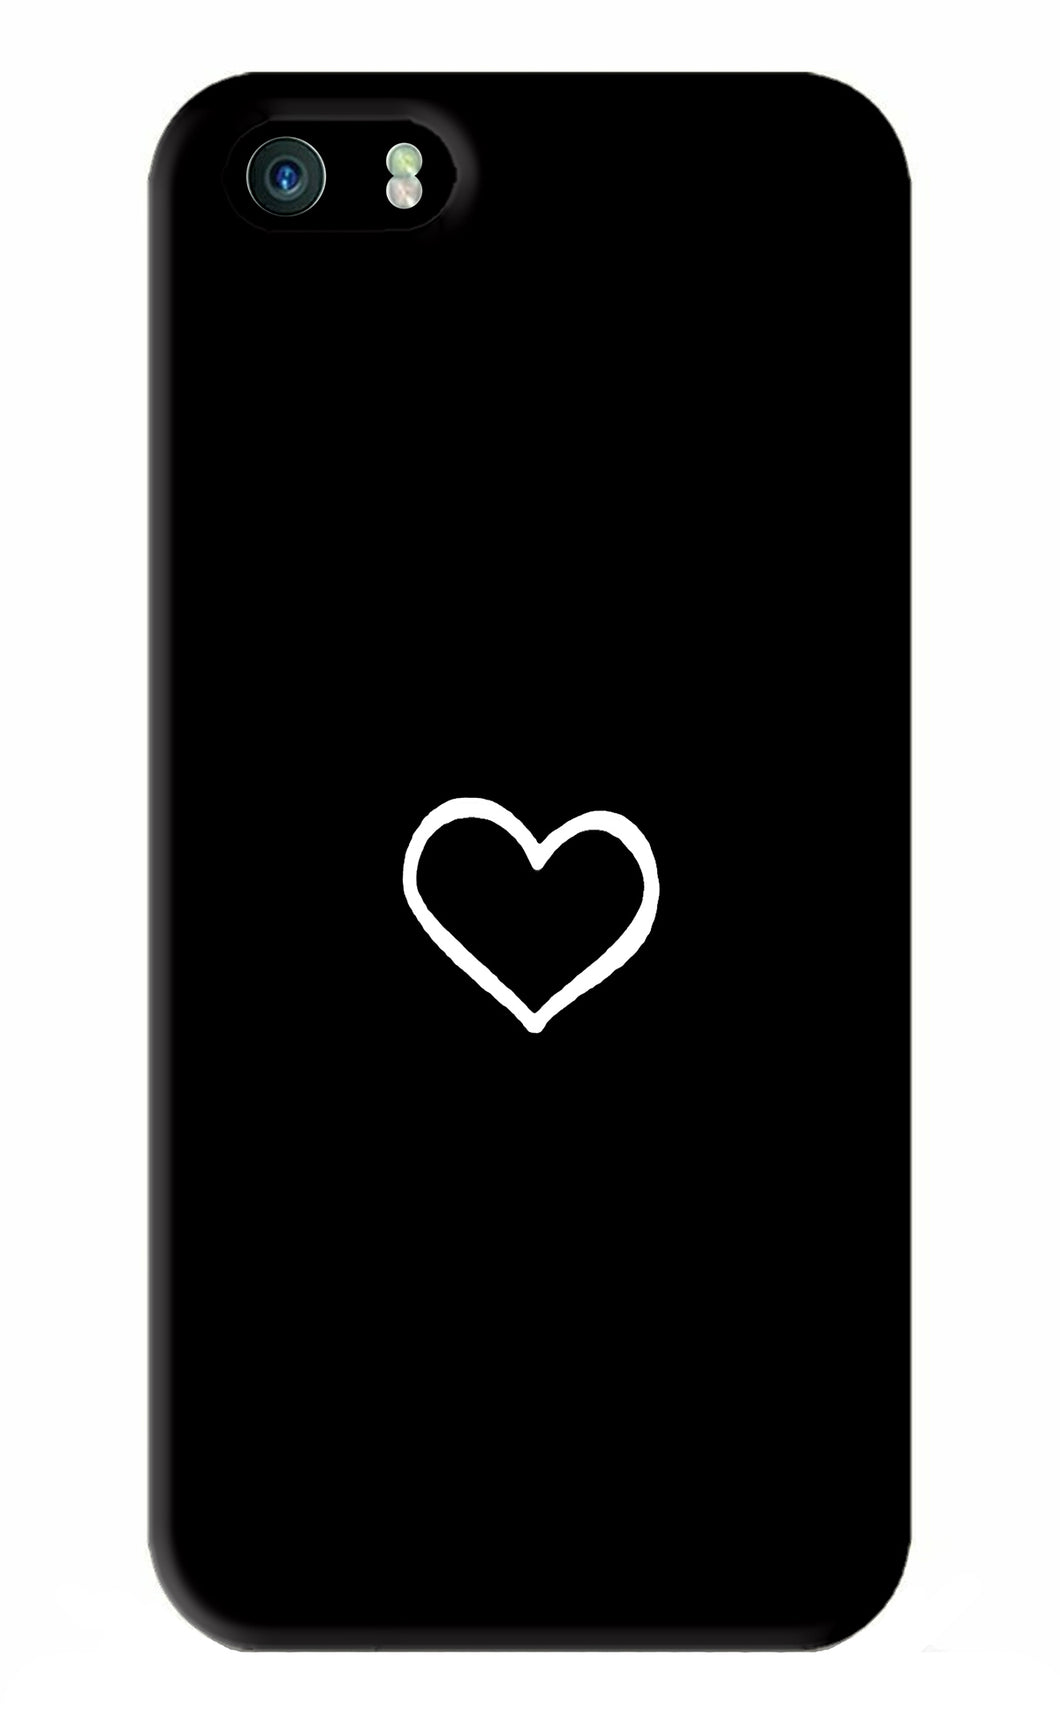 Heart iPhone 5S Back Skin Wrap